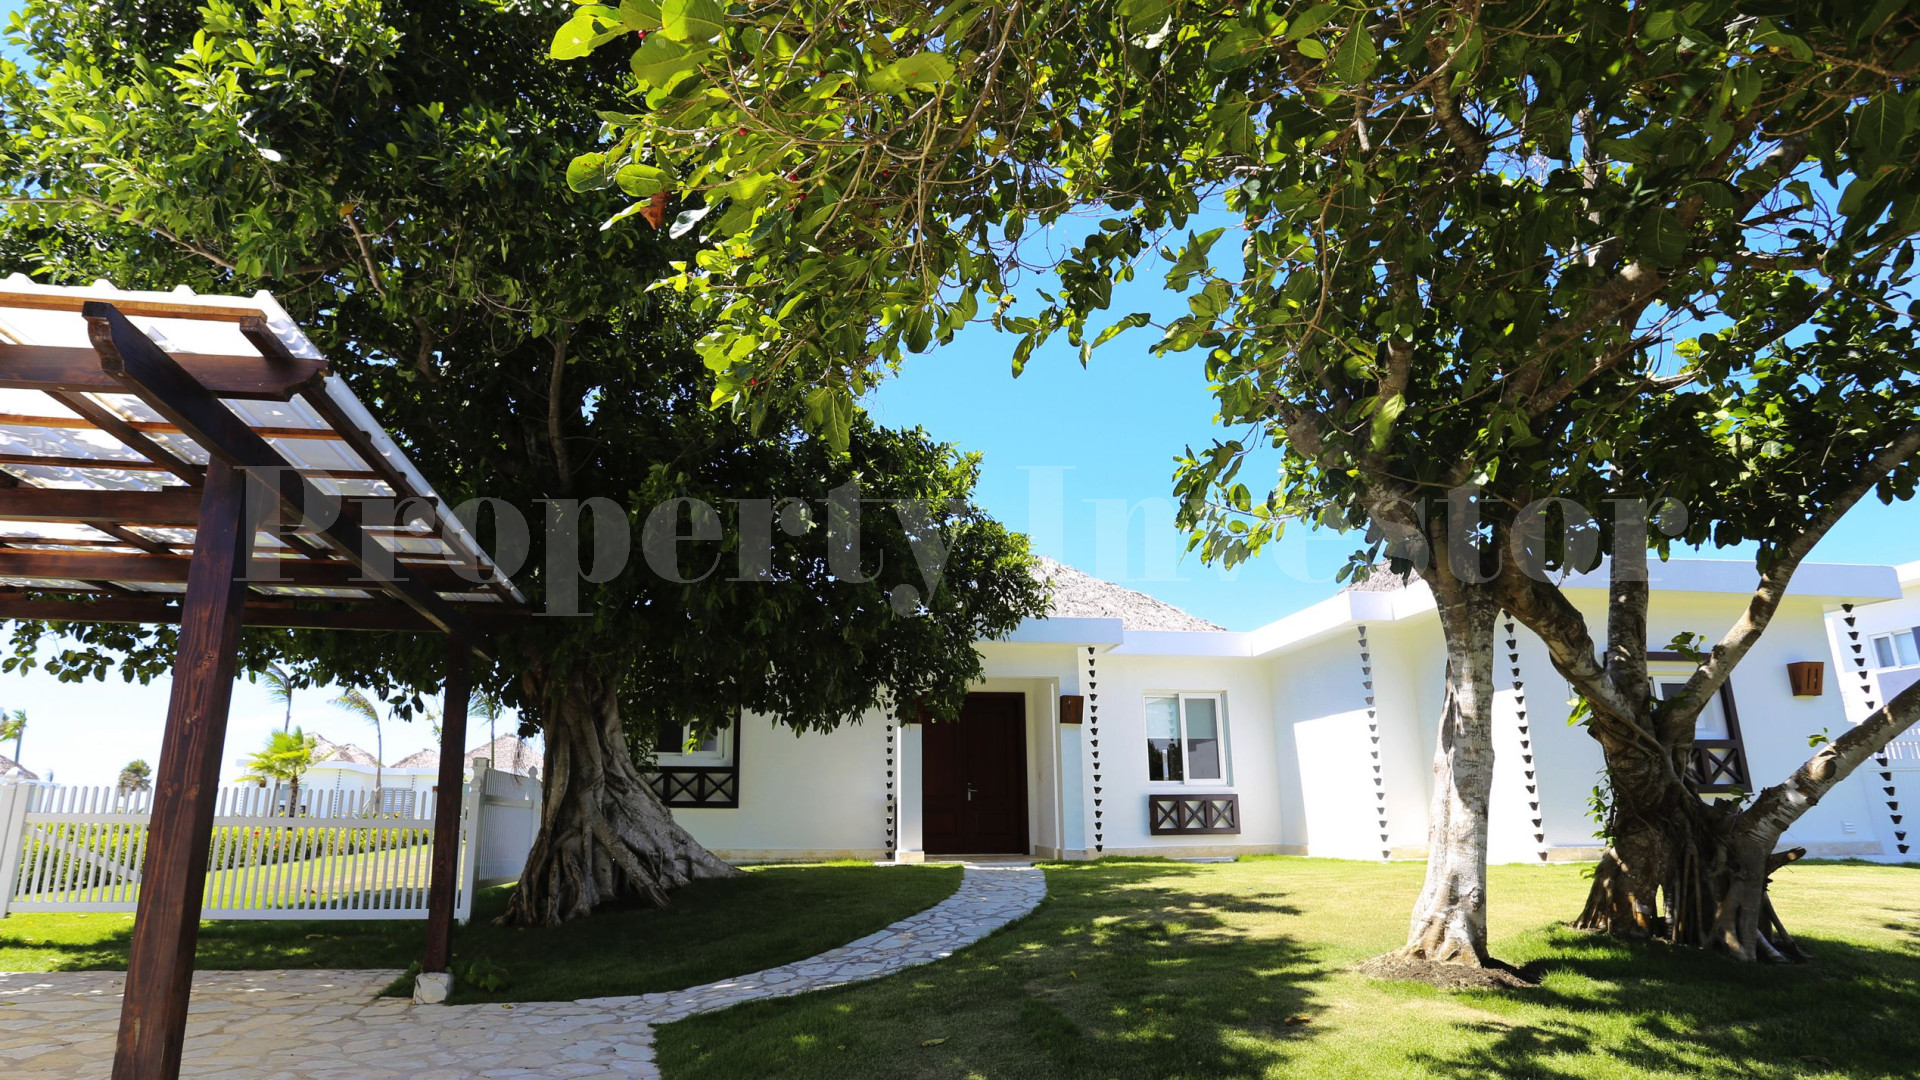 3 Bedroom Oceanview Villa in the Dominican Republic with 30 Year Financing (Villa 21)